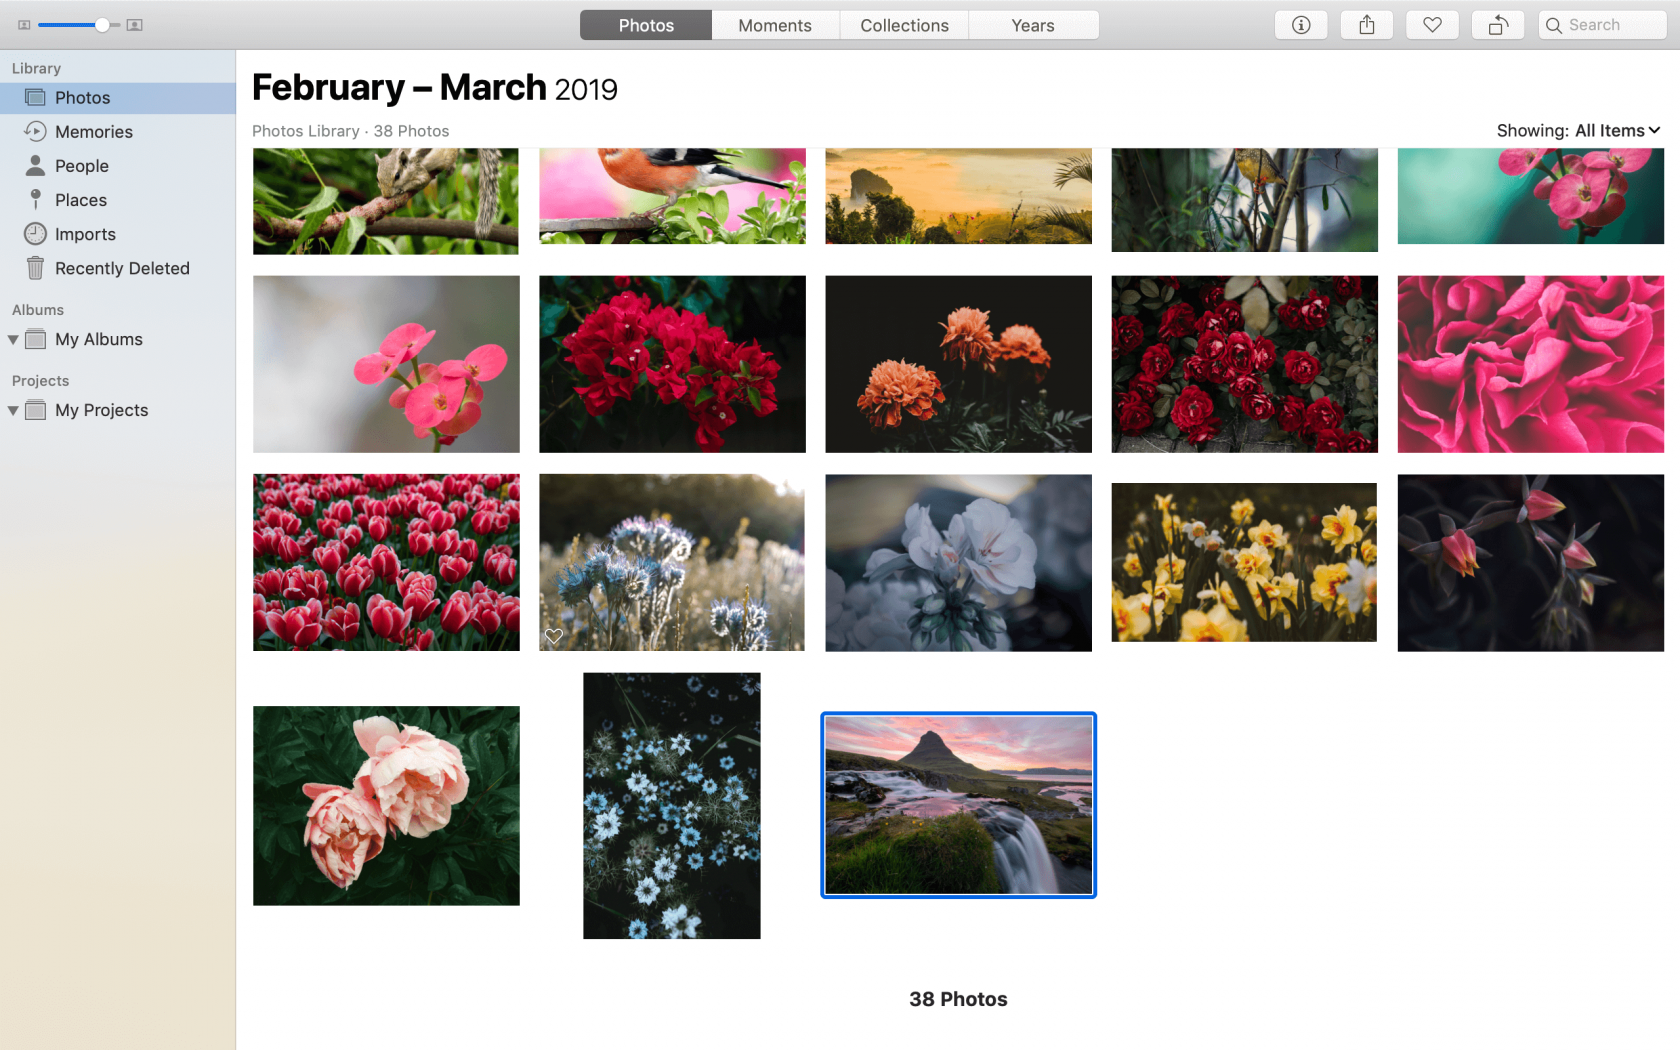 Mac Image Editor - How to Edit Photos on Mac